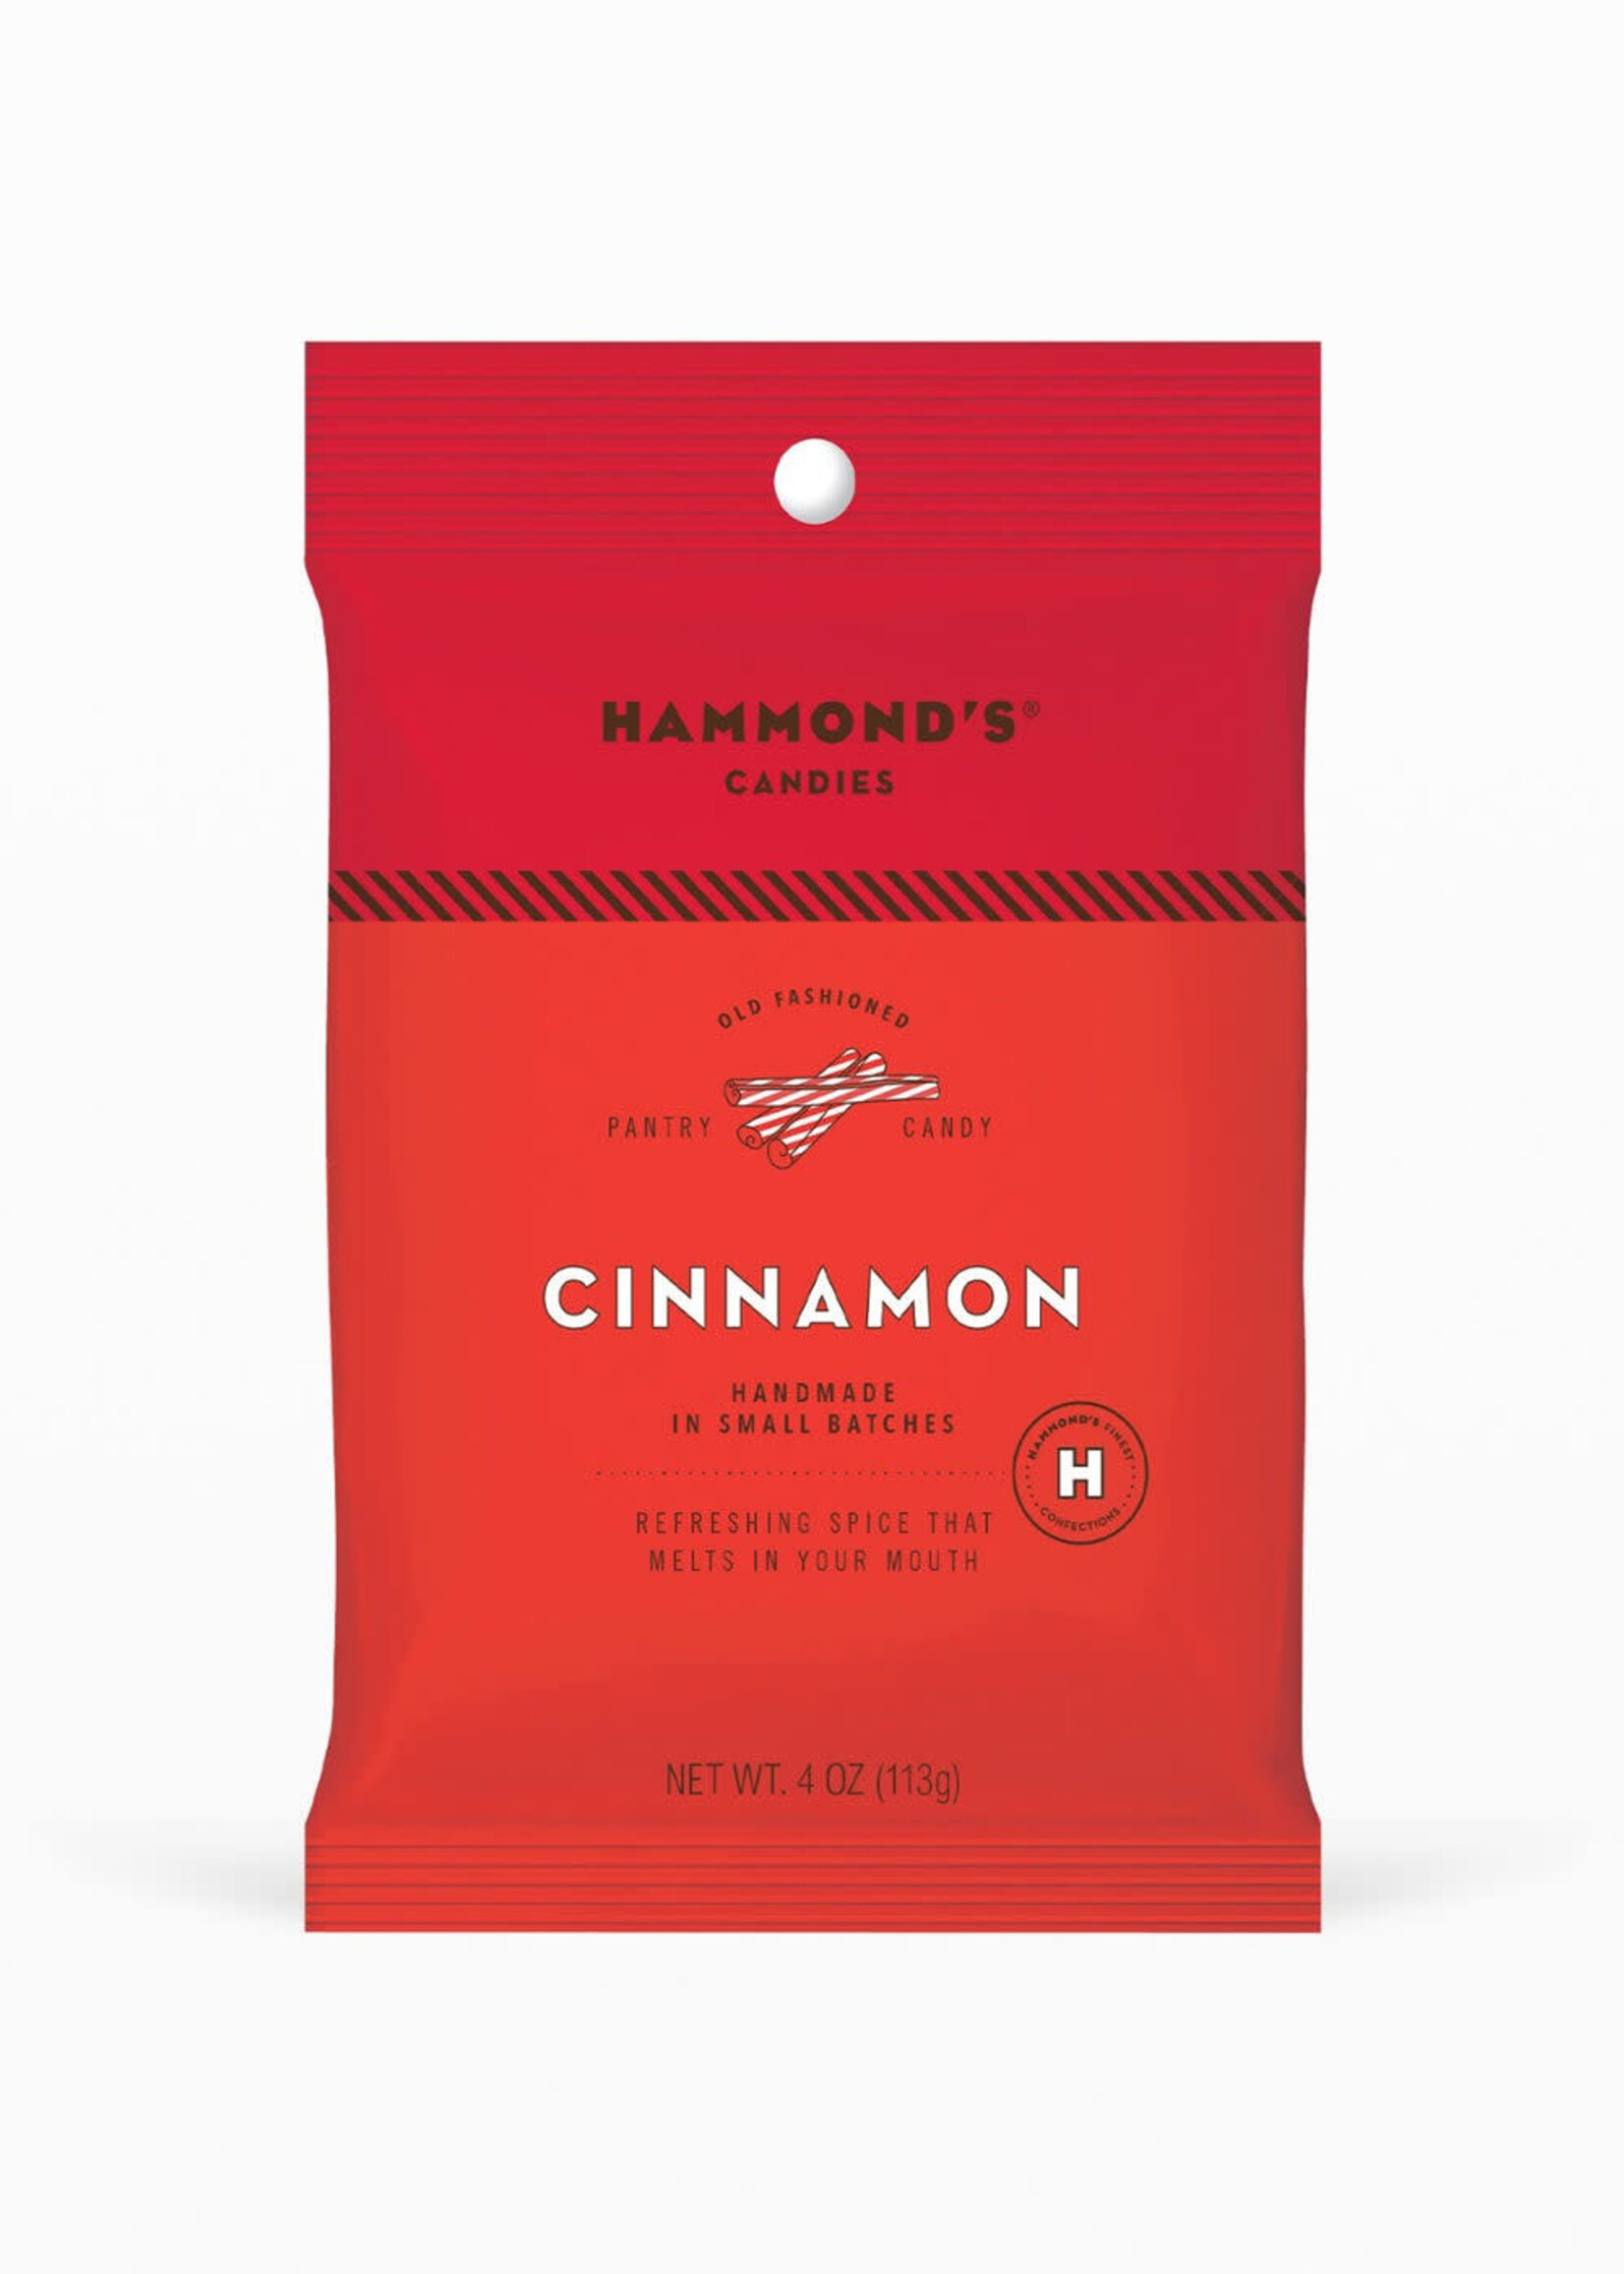 Hammond's Cinnamon Drops